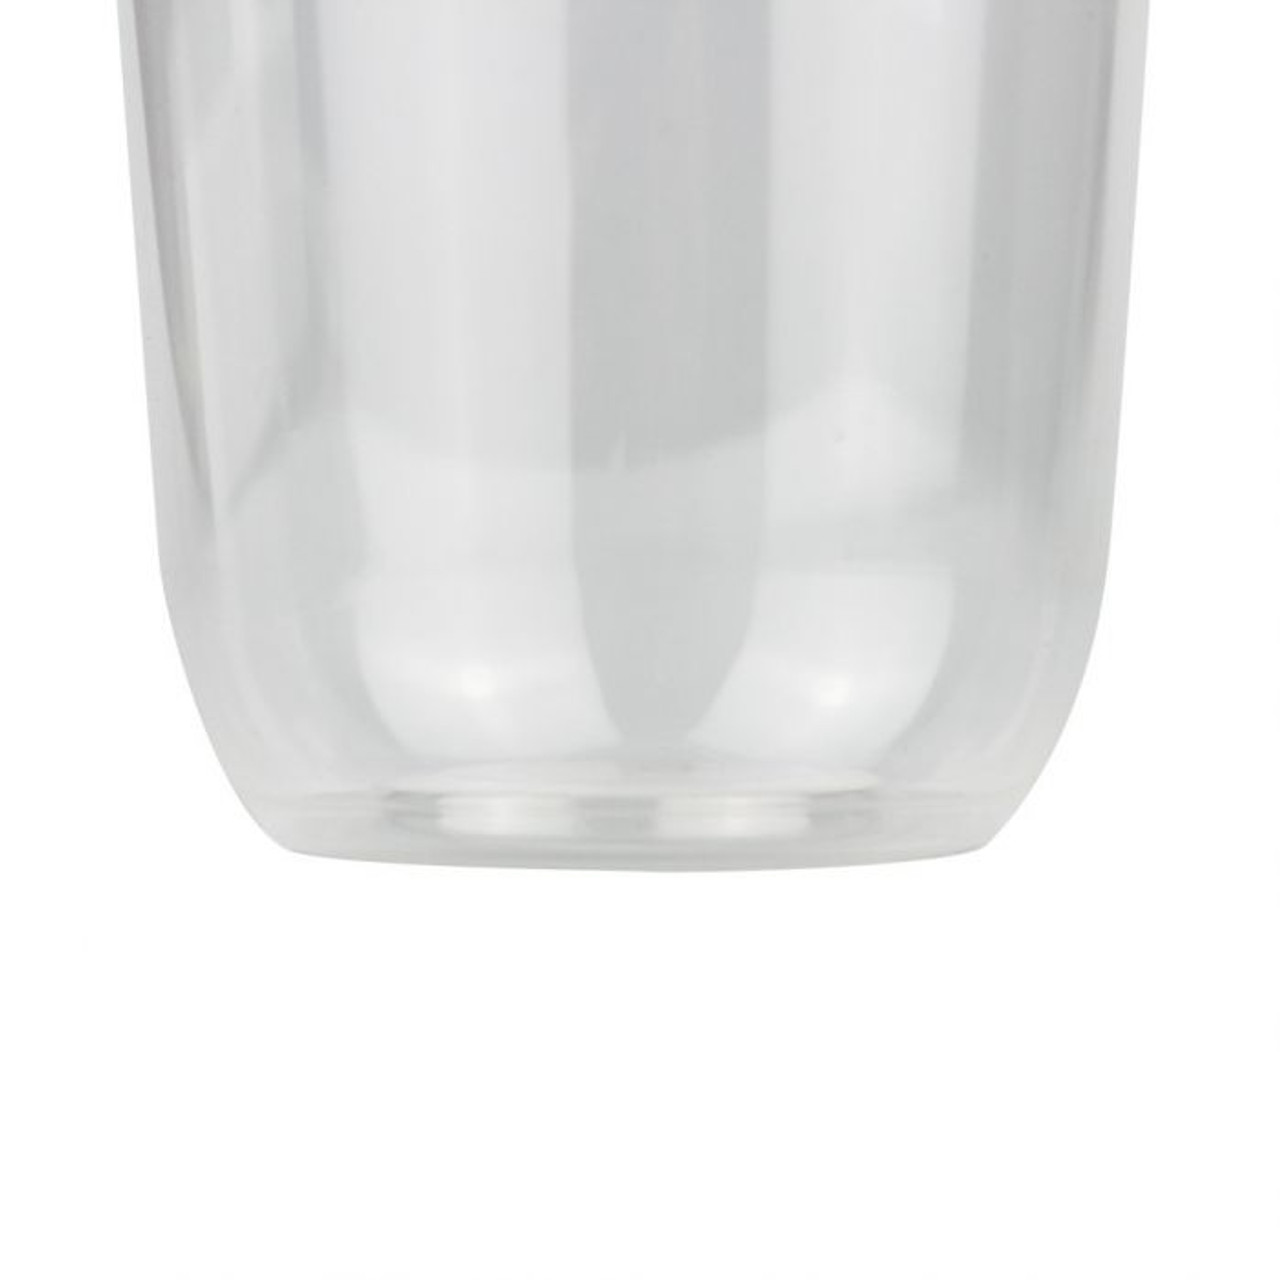 20 oz. Custom Printed Clear Plastic PET Portion Cups (95mm